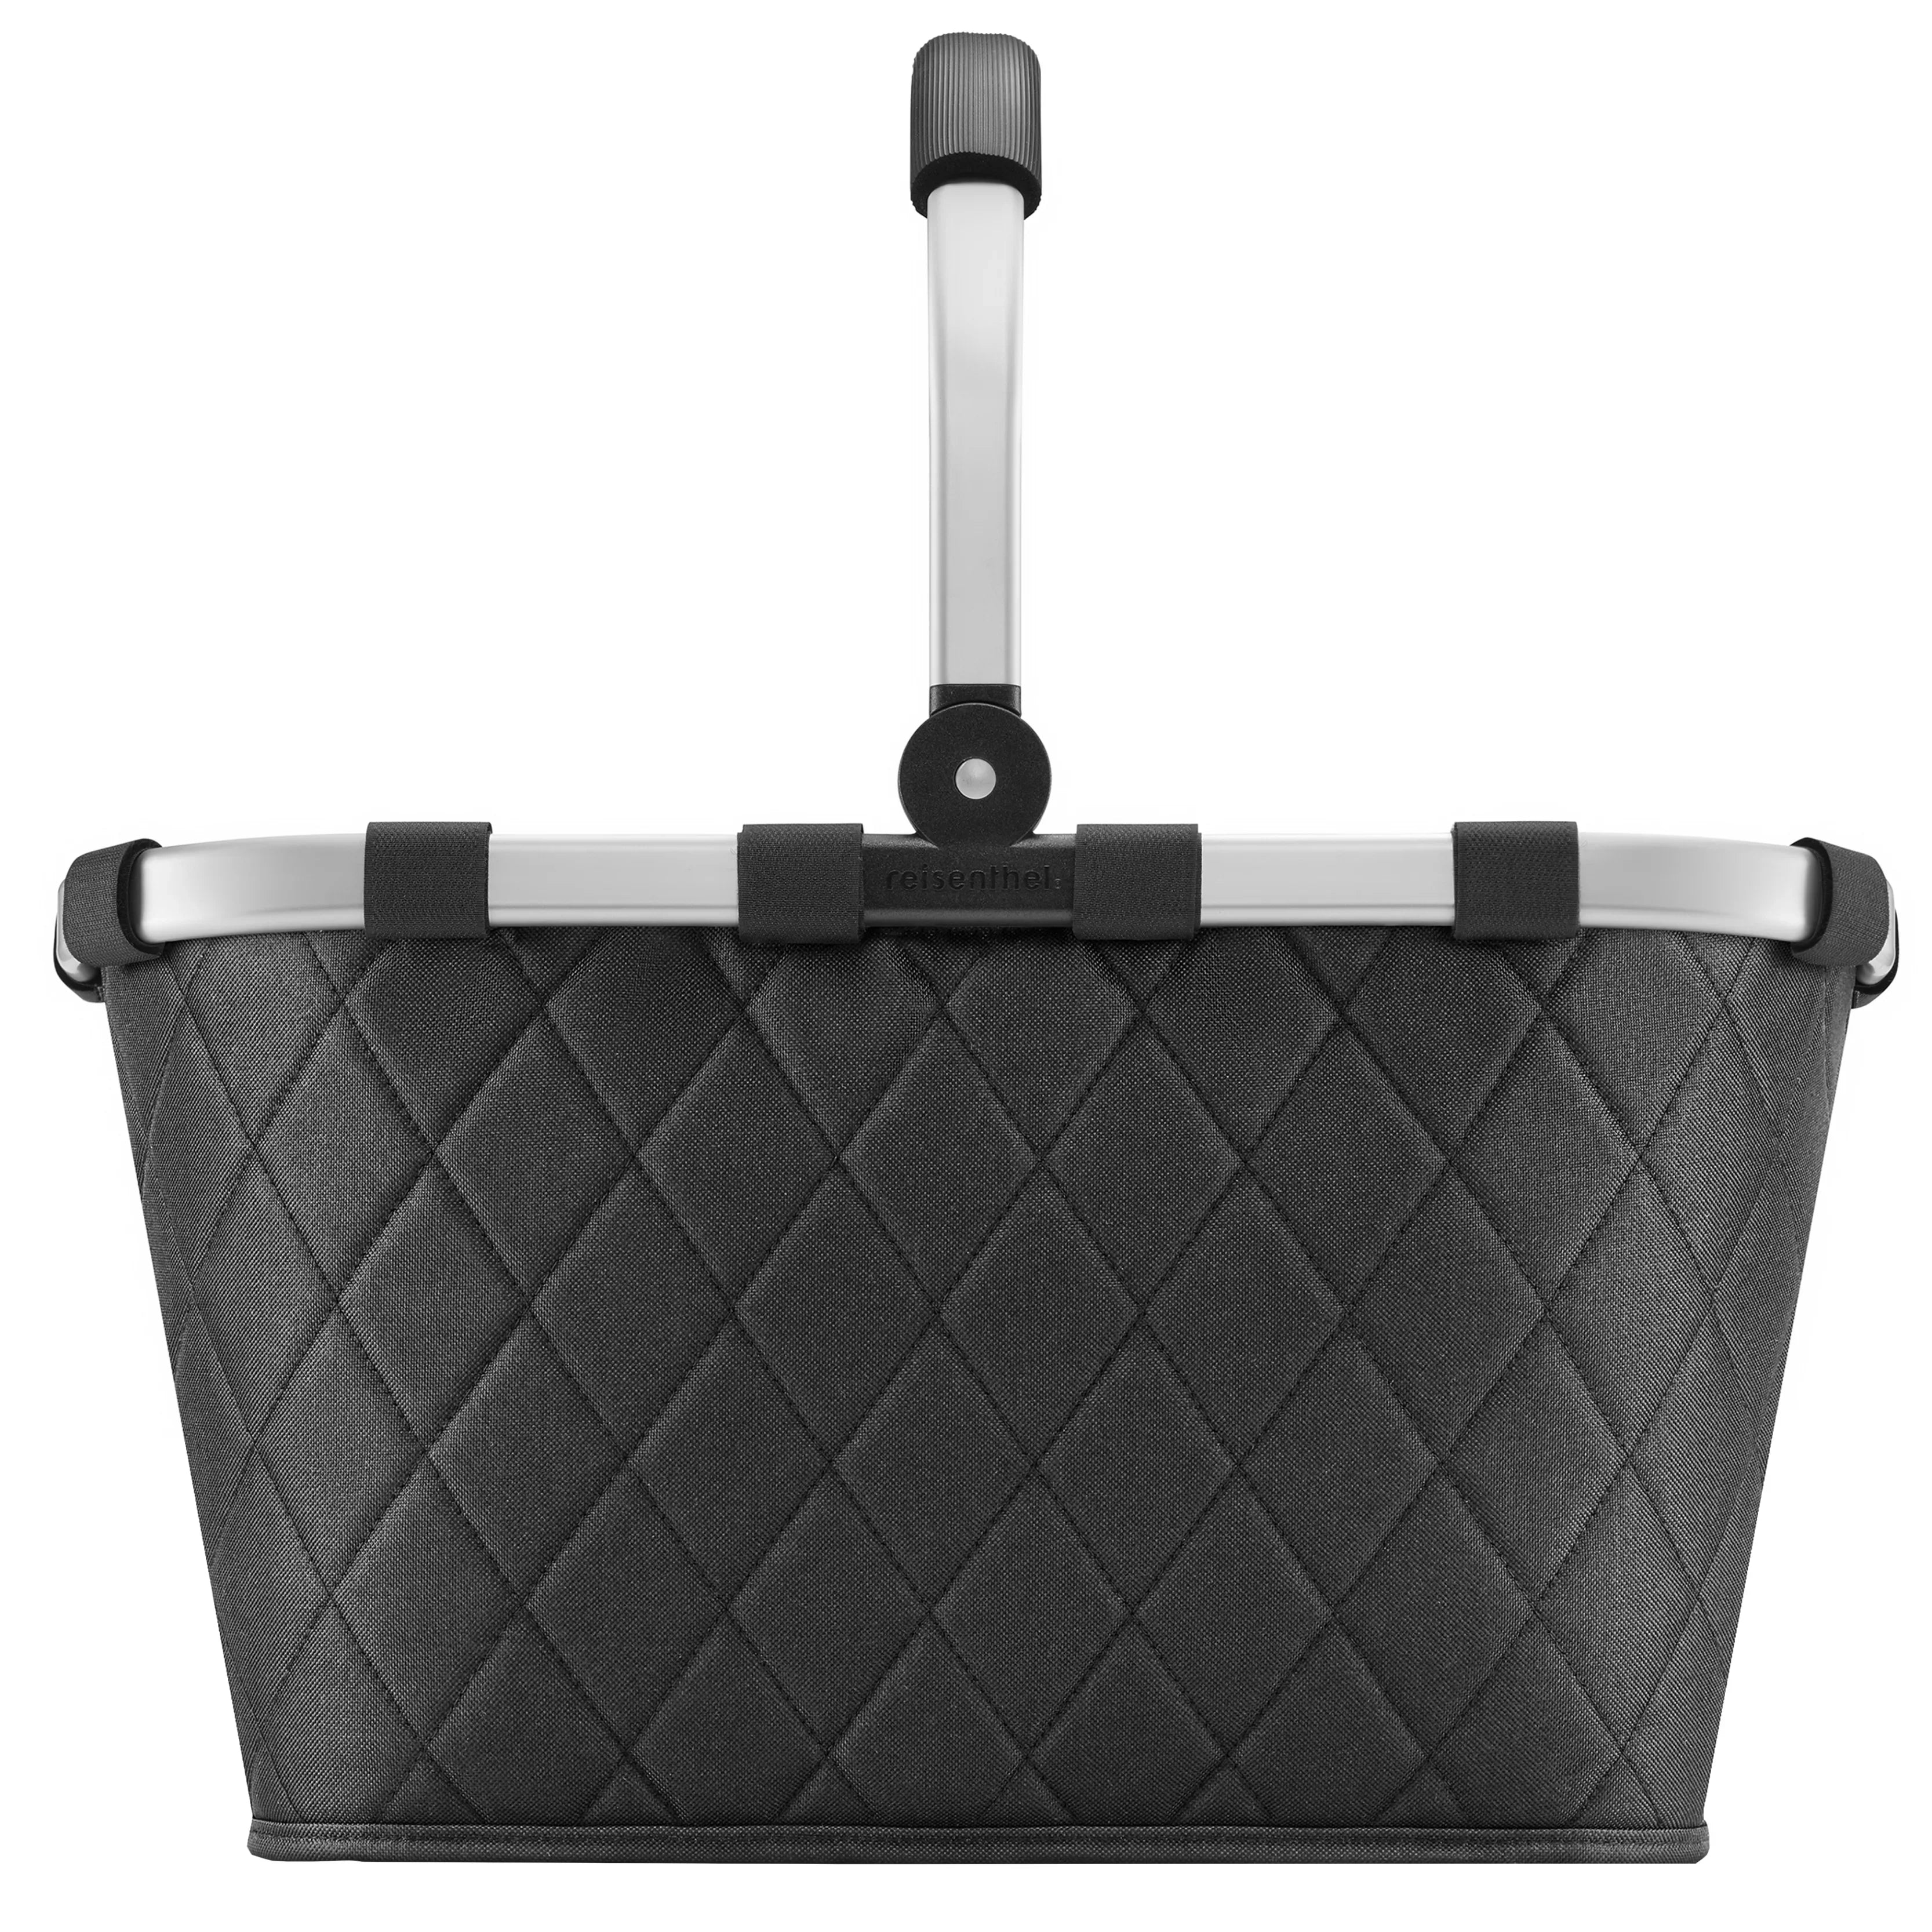 Reisenthel Rhombus Carrybag Einkaufskorb 48 cm - Rhombus Black